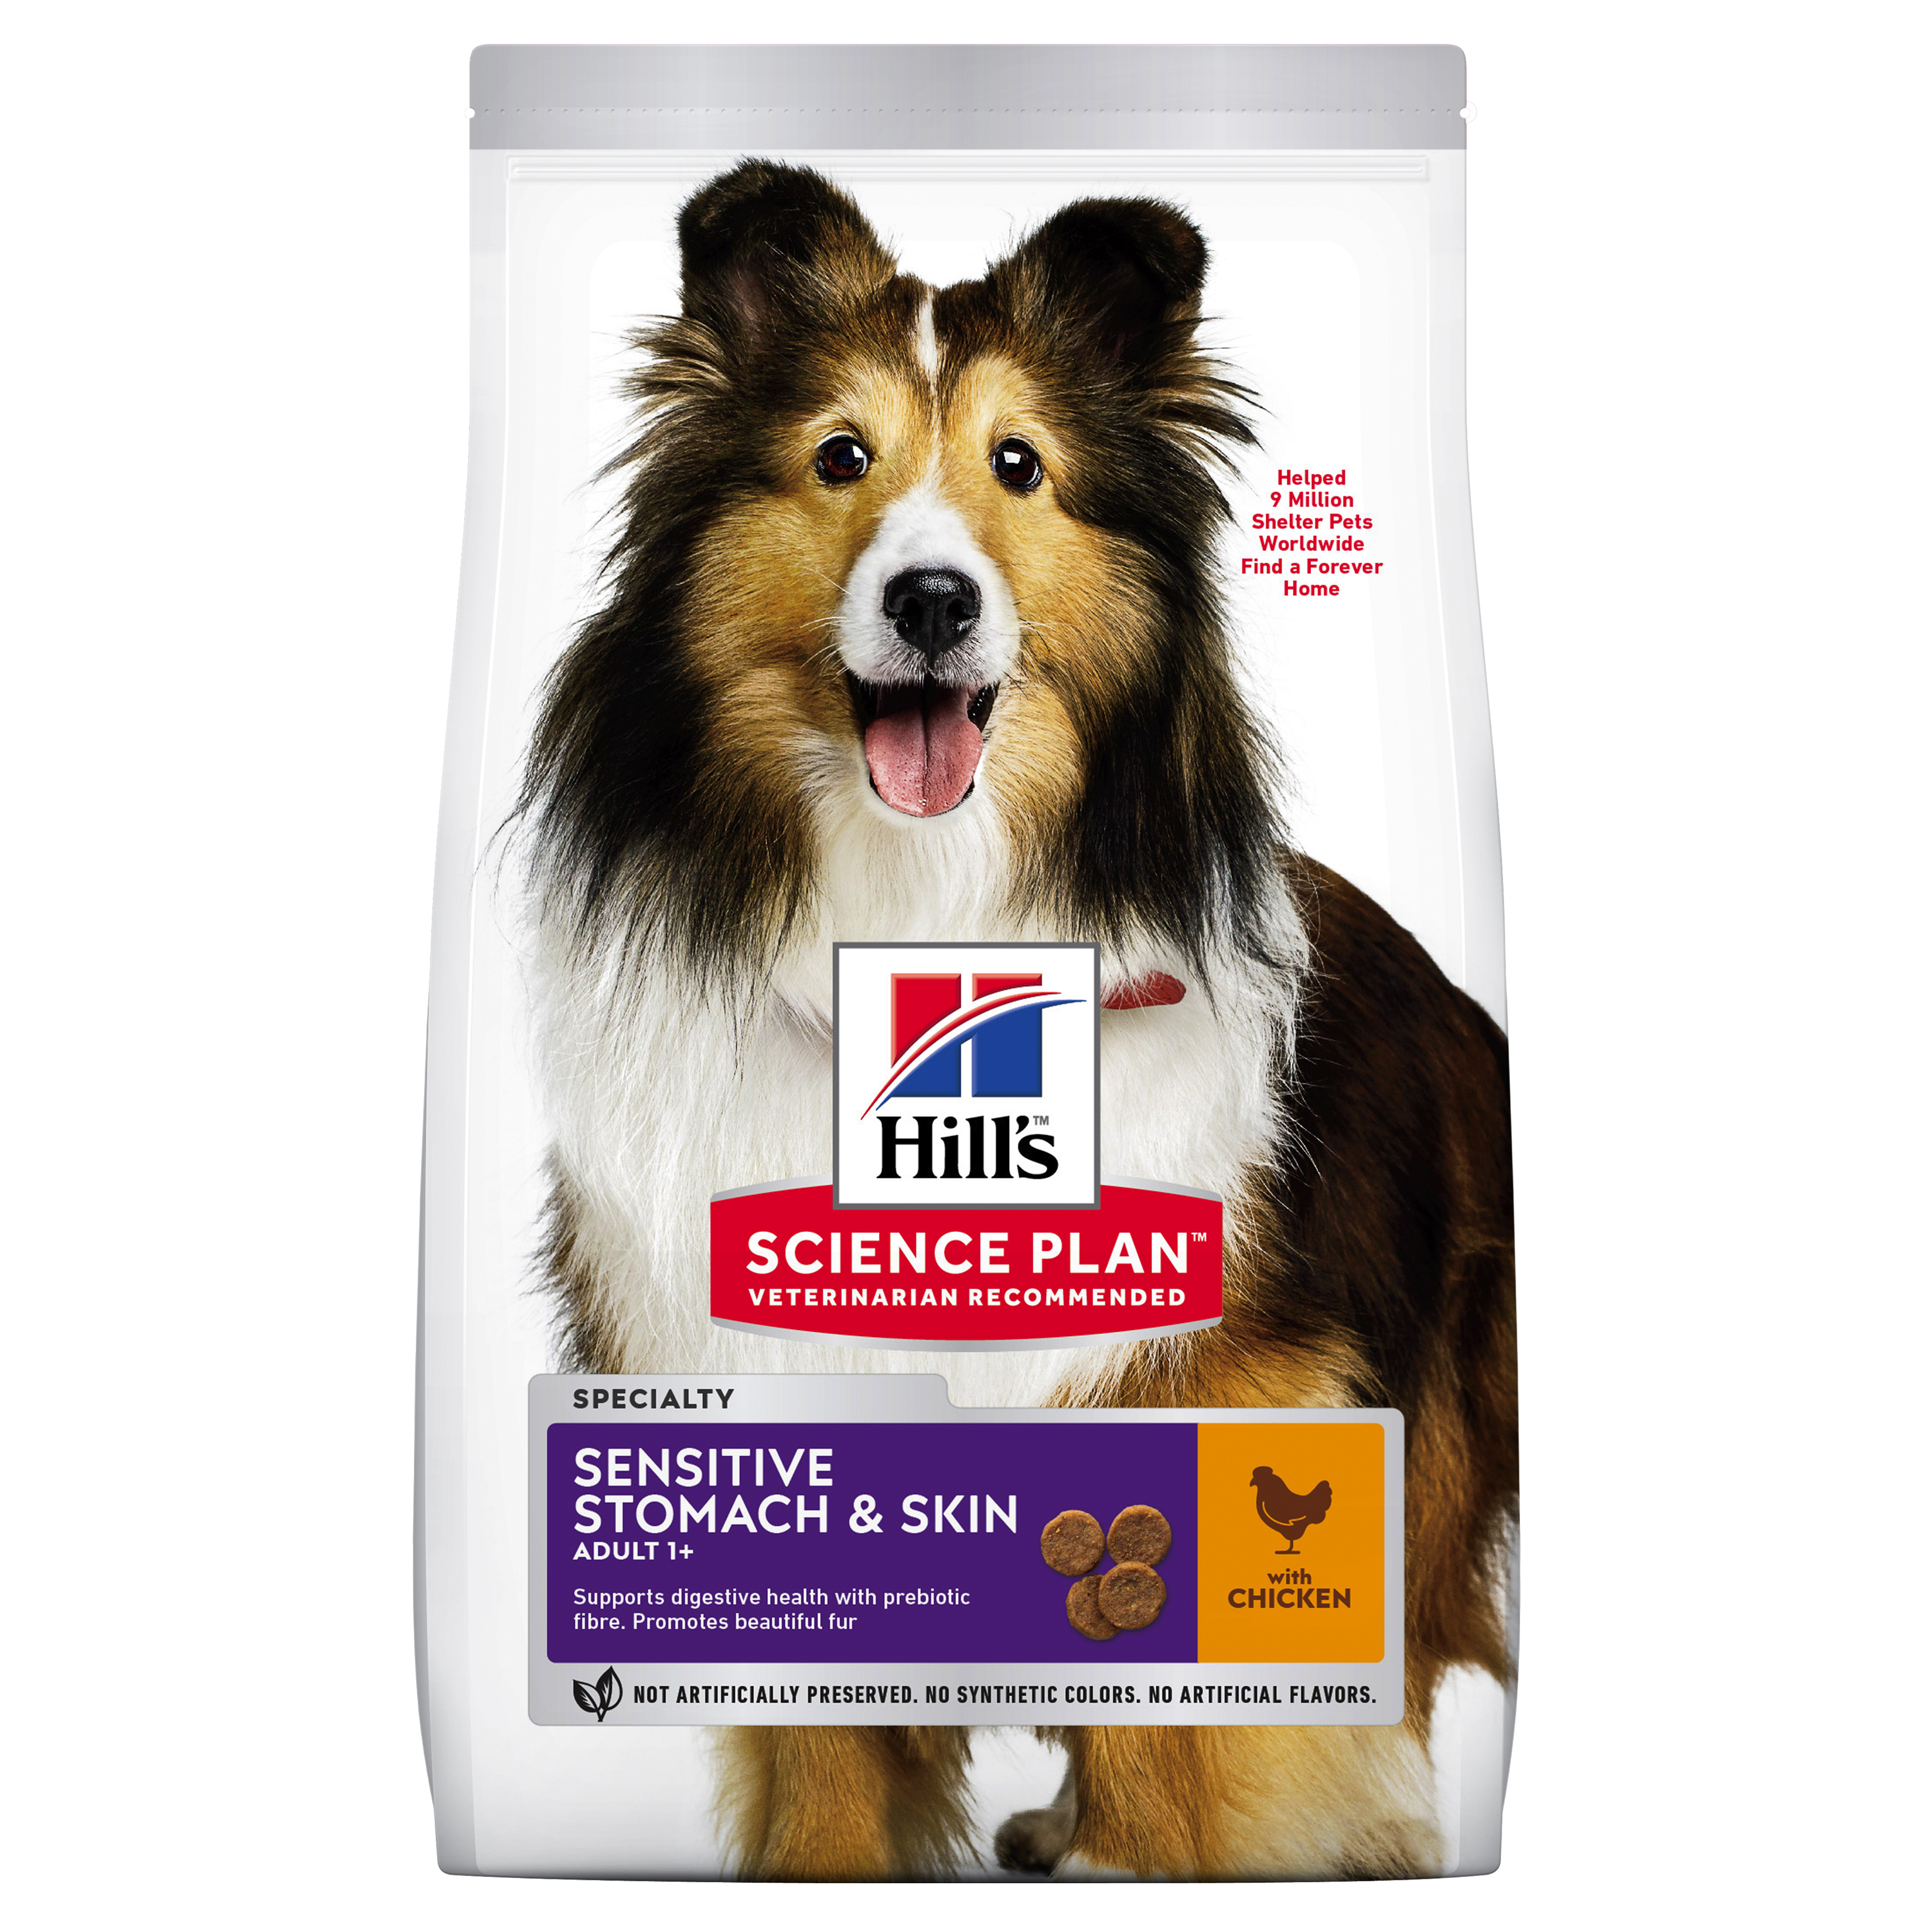 Hill's Science Plan עור רגיש וקיבה רגישה לכלב בוגר (עם עוף), 14 ק"ג